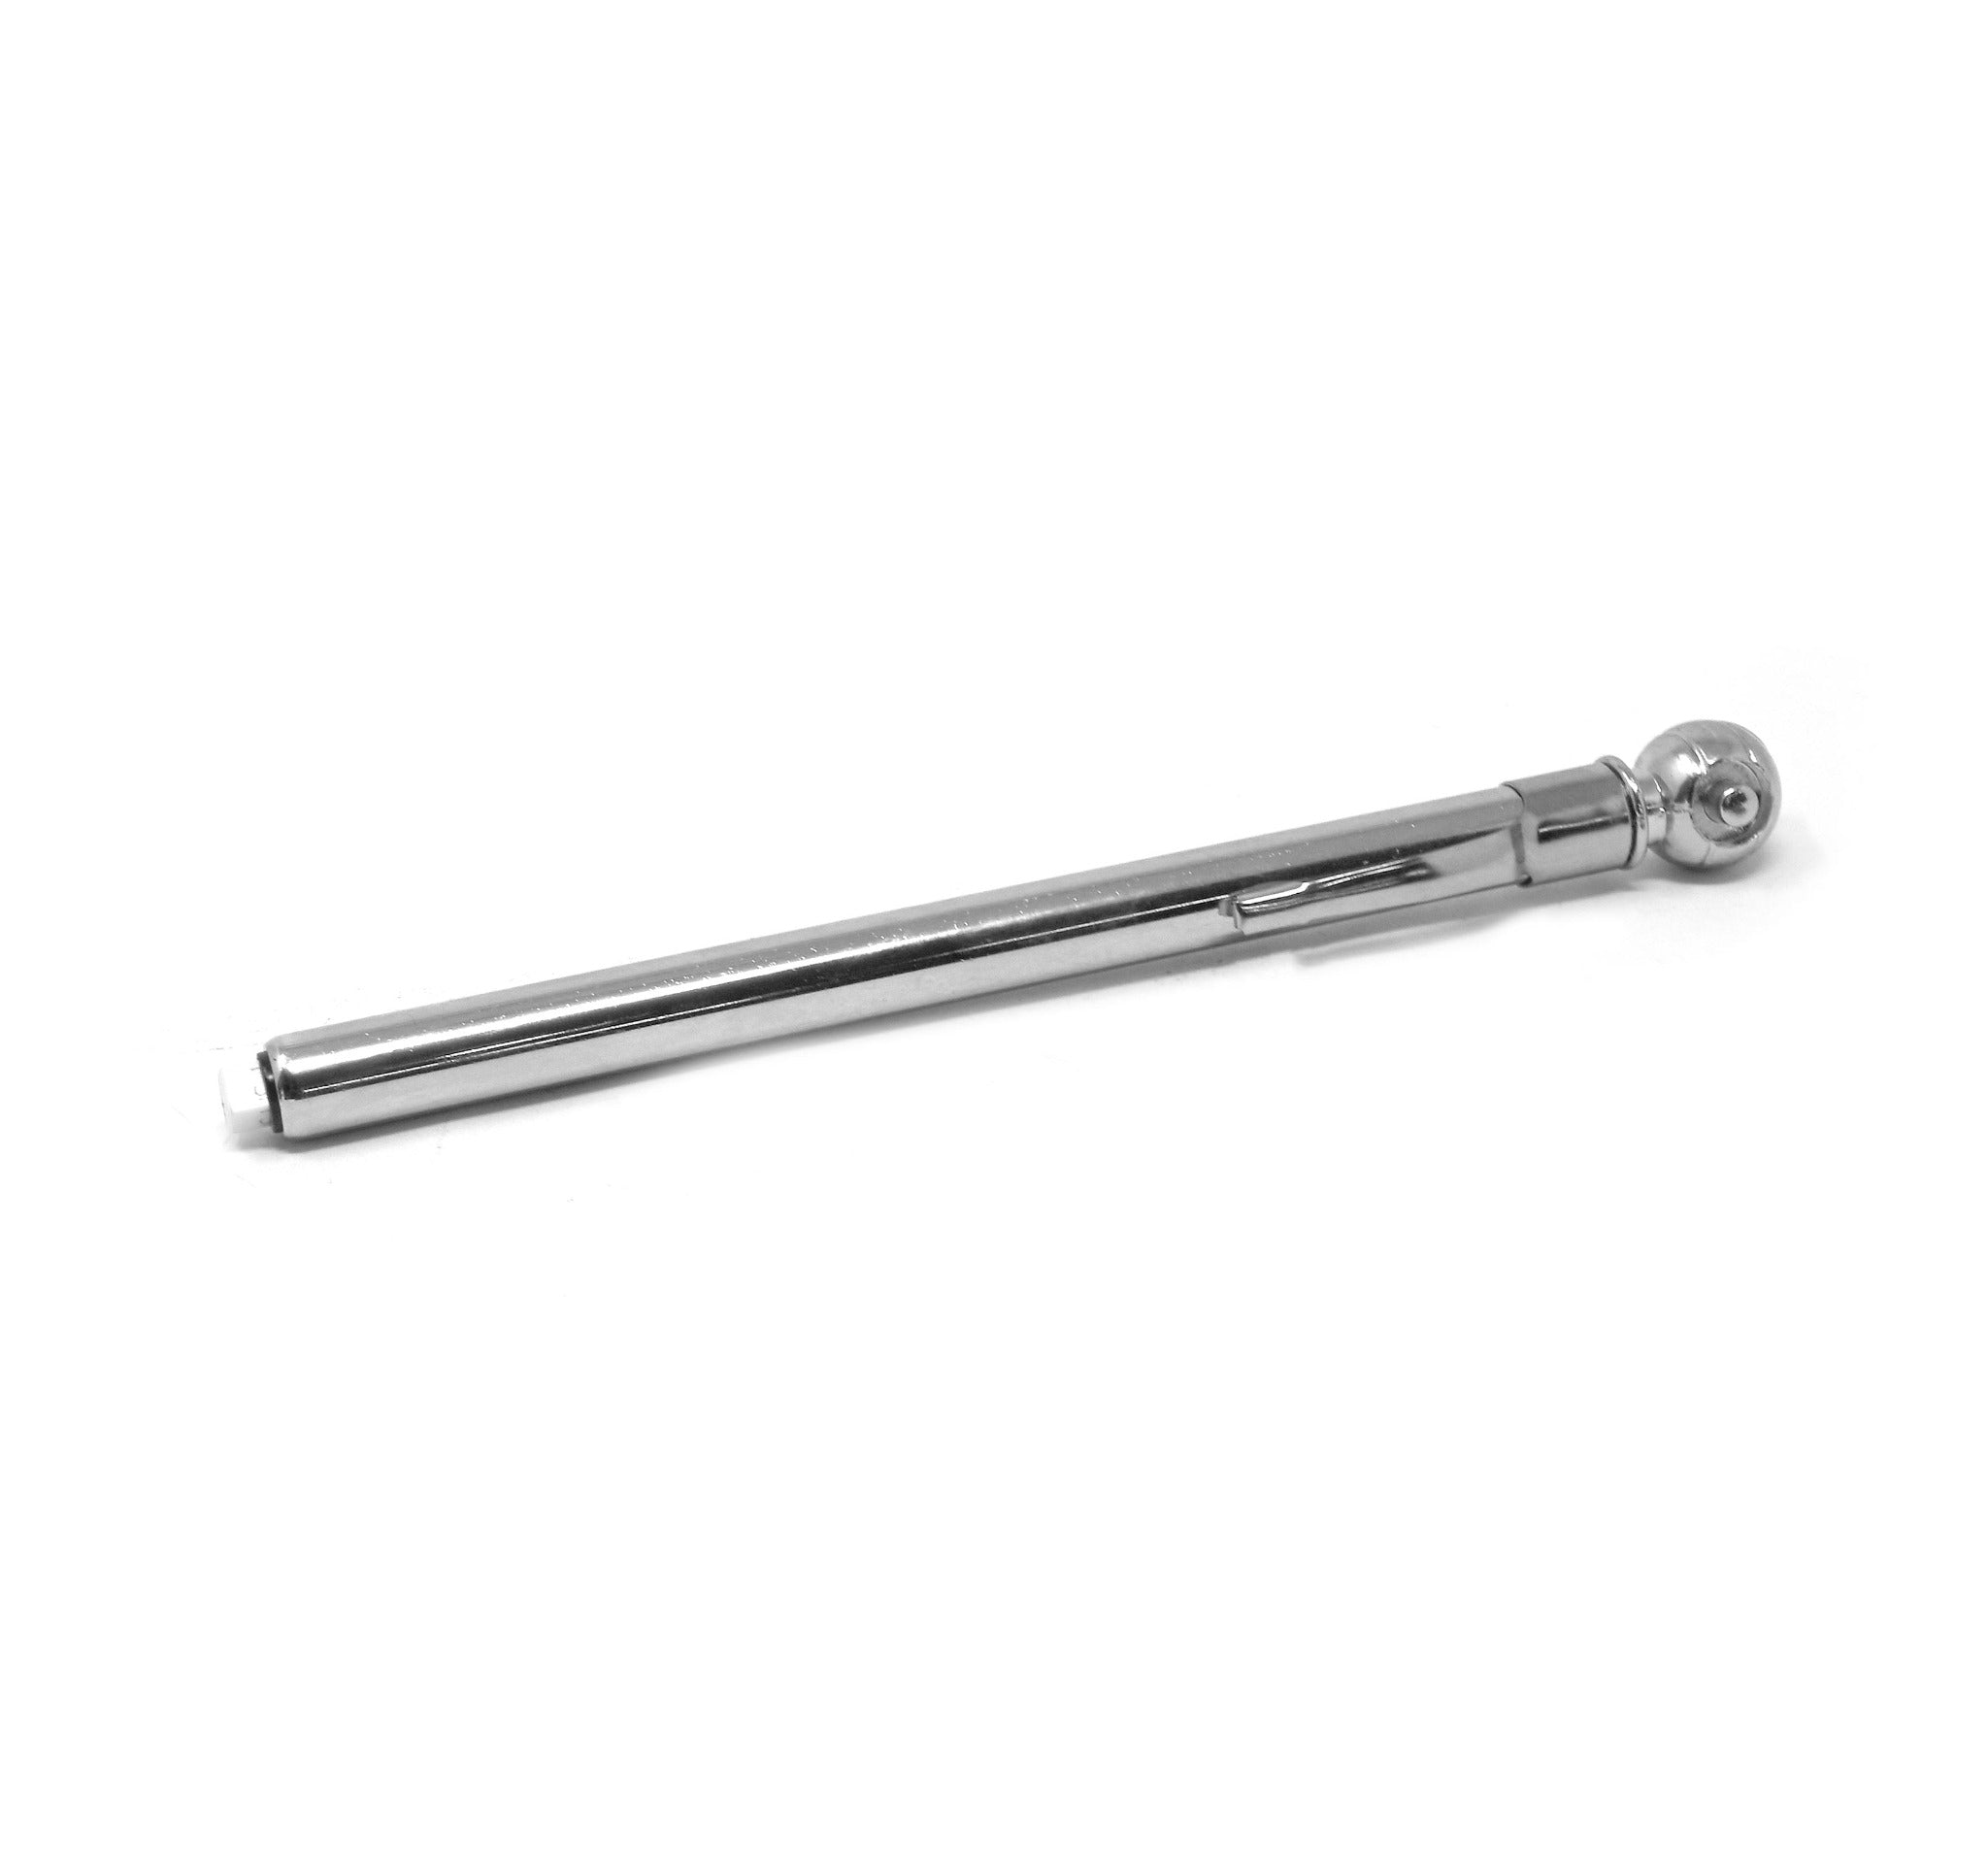 Standard Passenger Pencil Gauge 10 – 50 psi